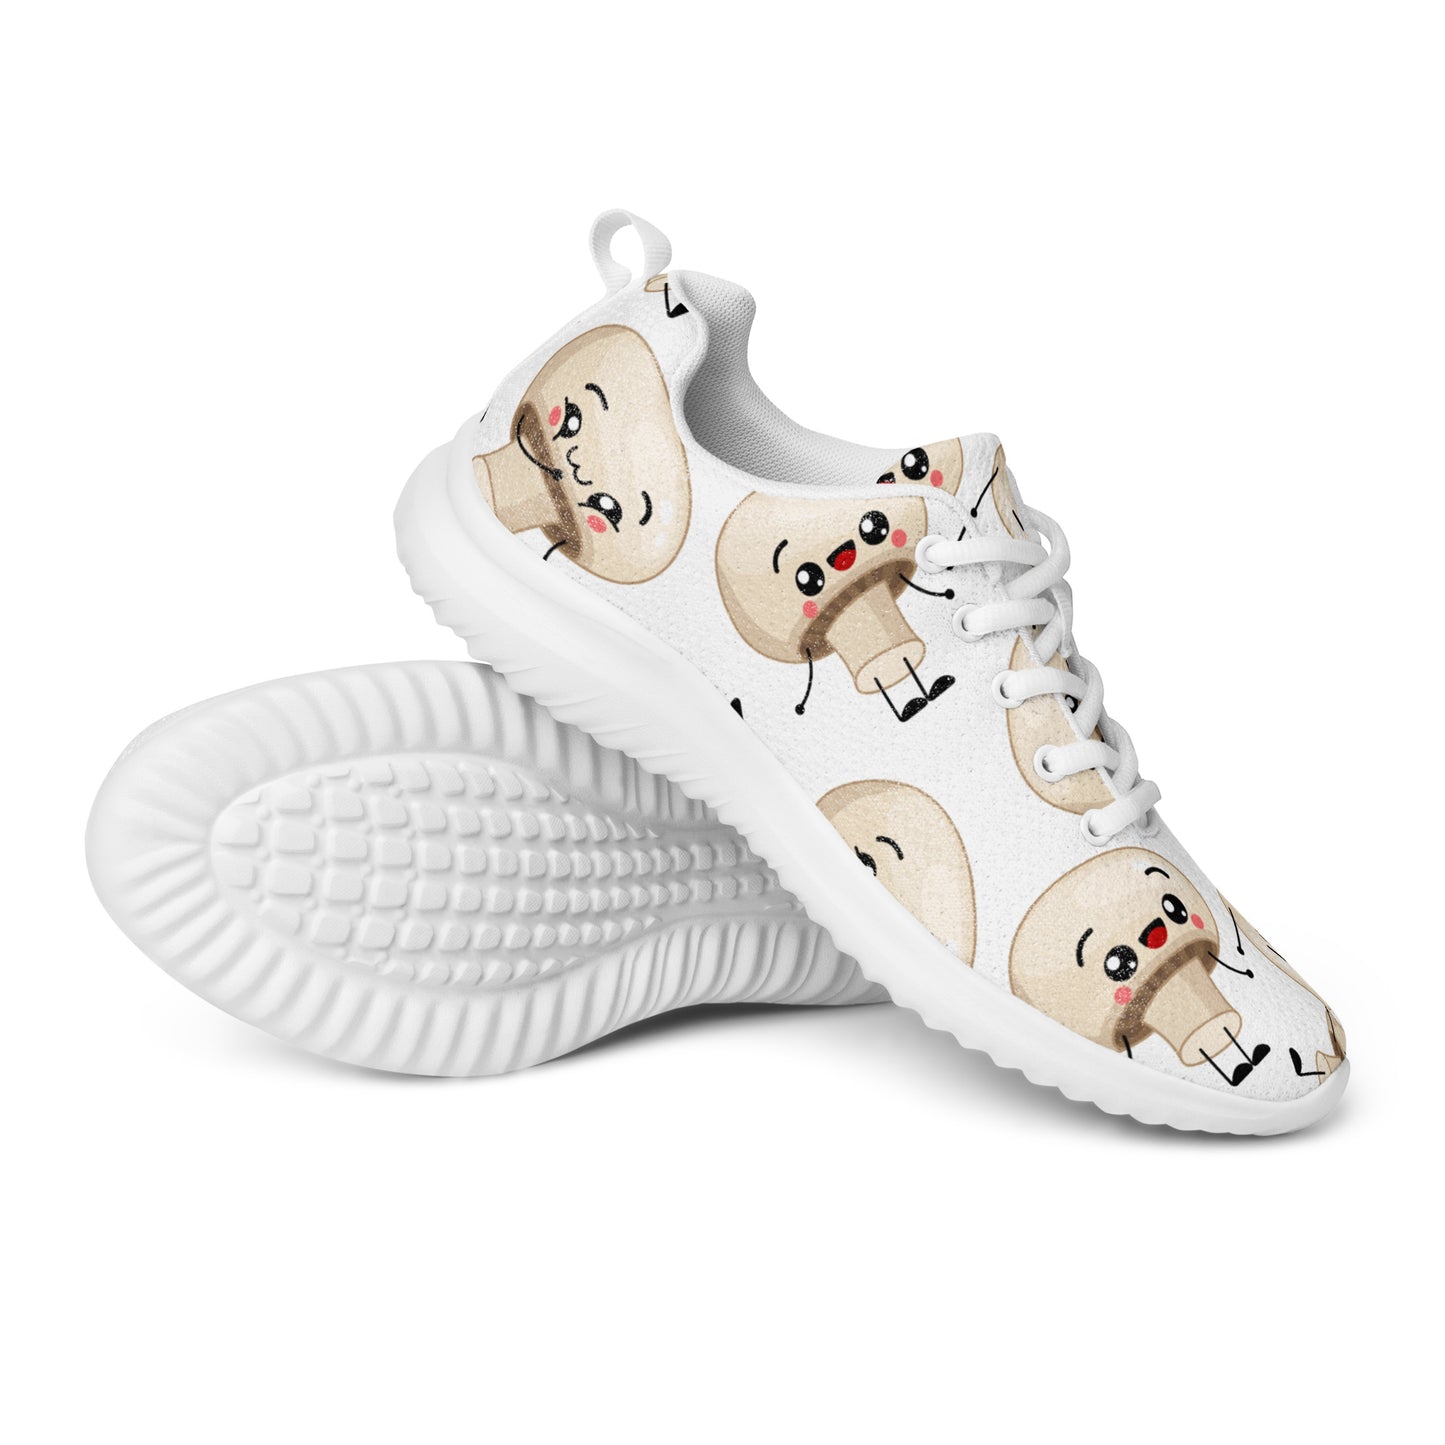 Cute Mushrooms - Men’s athletic shoes Mens Athletic Shoes